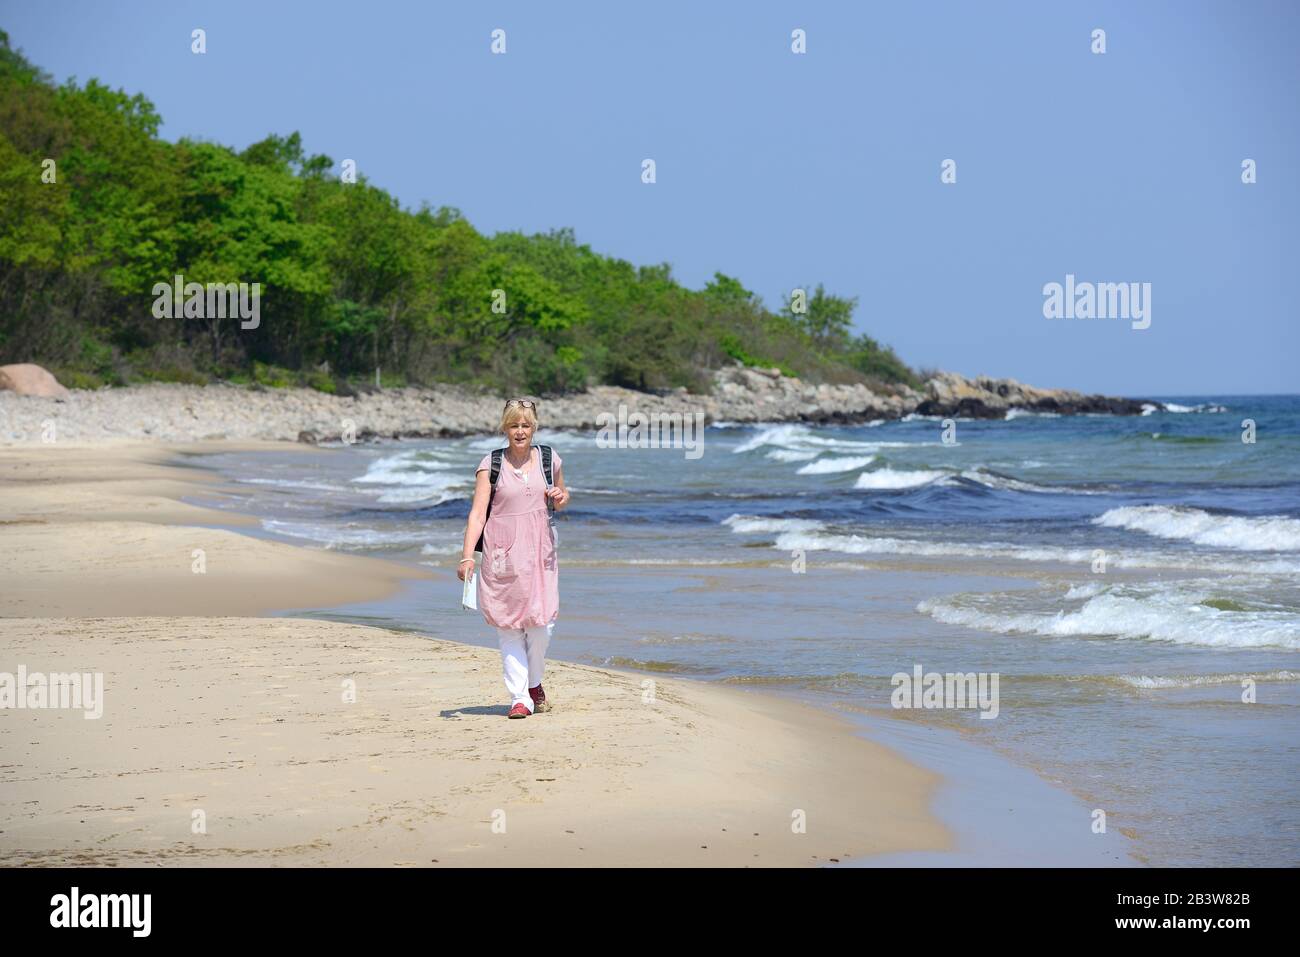 A woman walking on a sandy beach, Skane, Sweden Stock Photo